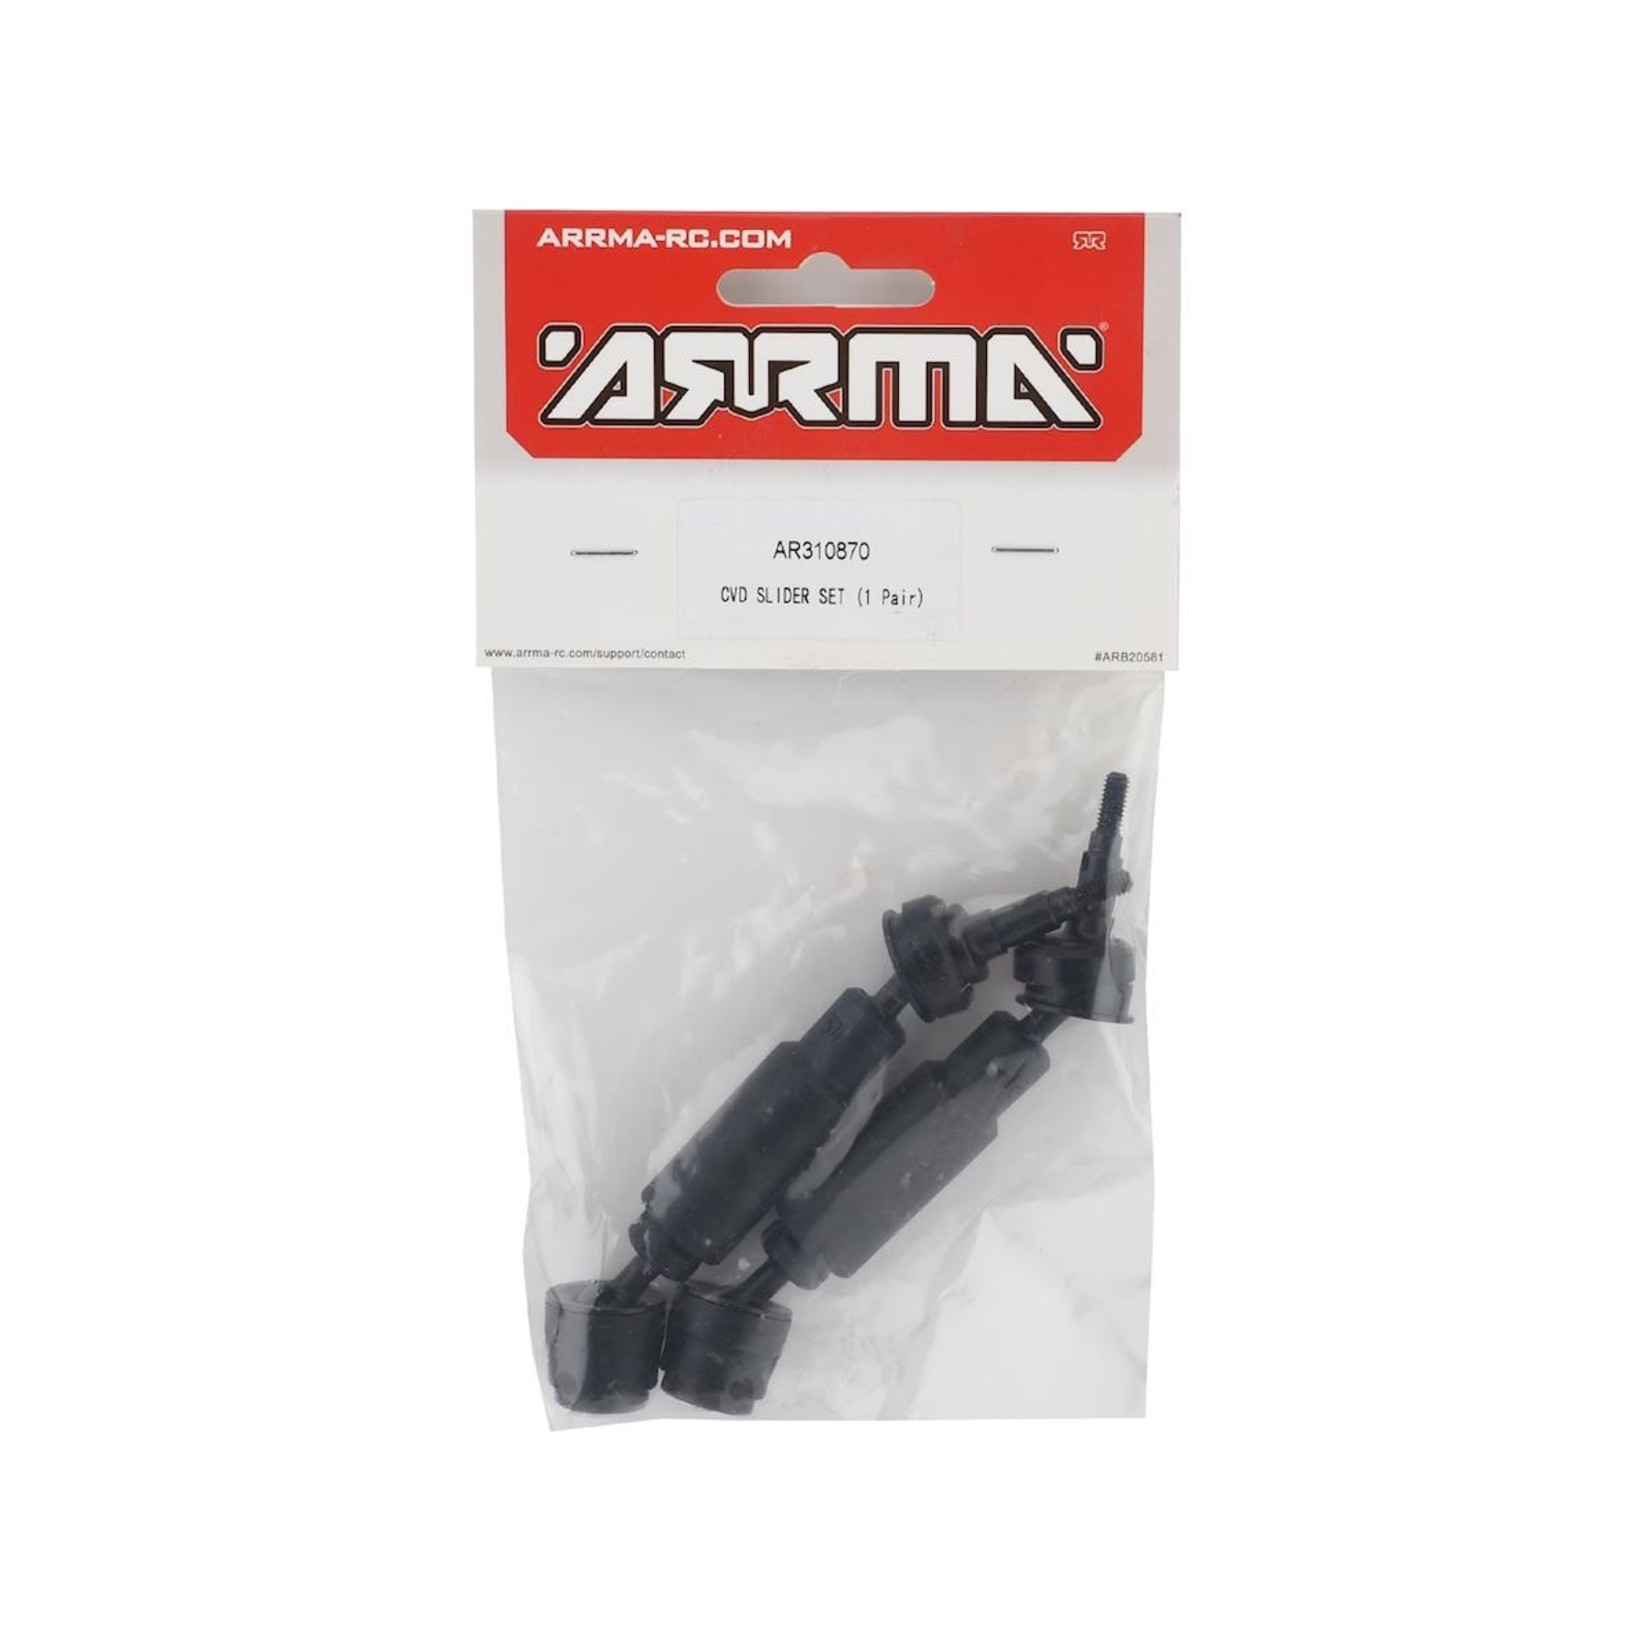 ARRMA Arrma 4X4 Mega CVD Slider Set #AR310870